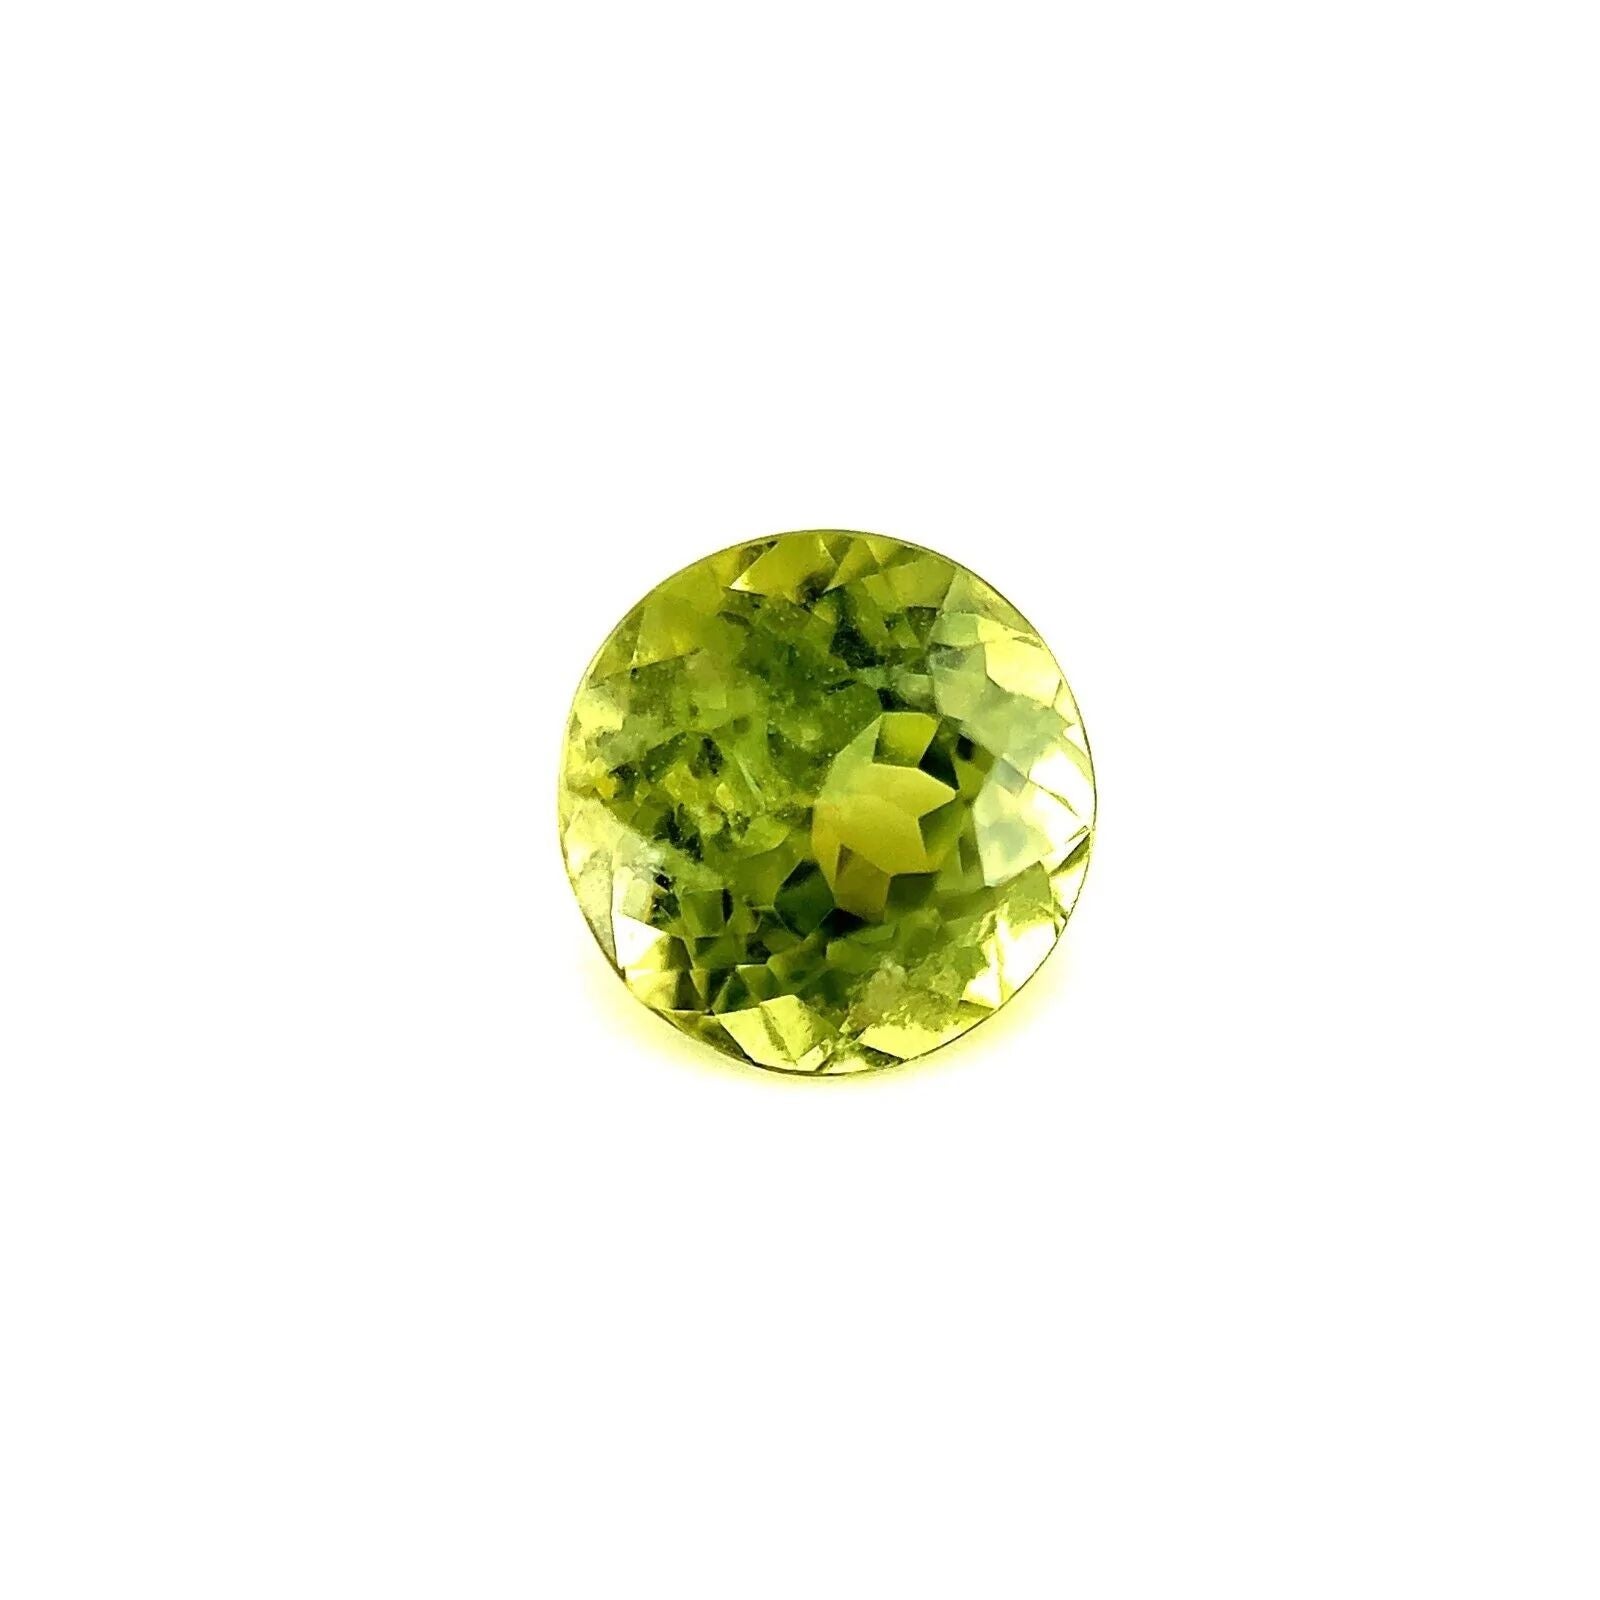 Pierre précieuse non sertie, saphir jaune et vert vif taille ronde brillant 1,58 carat